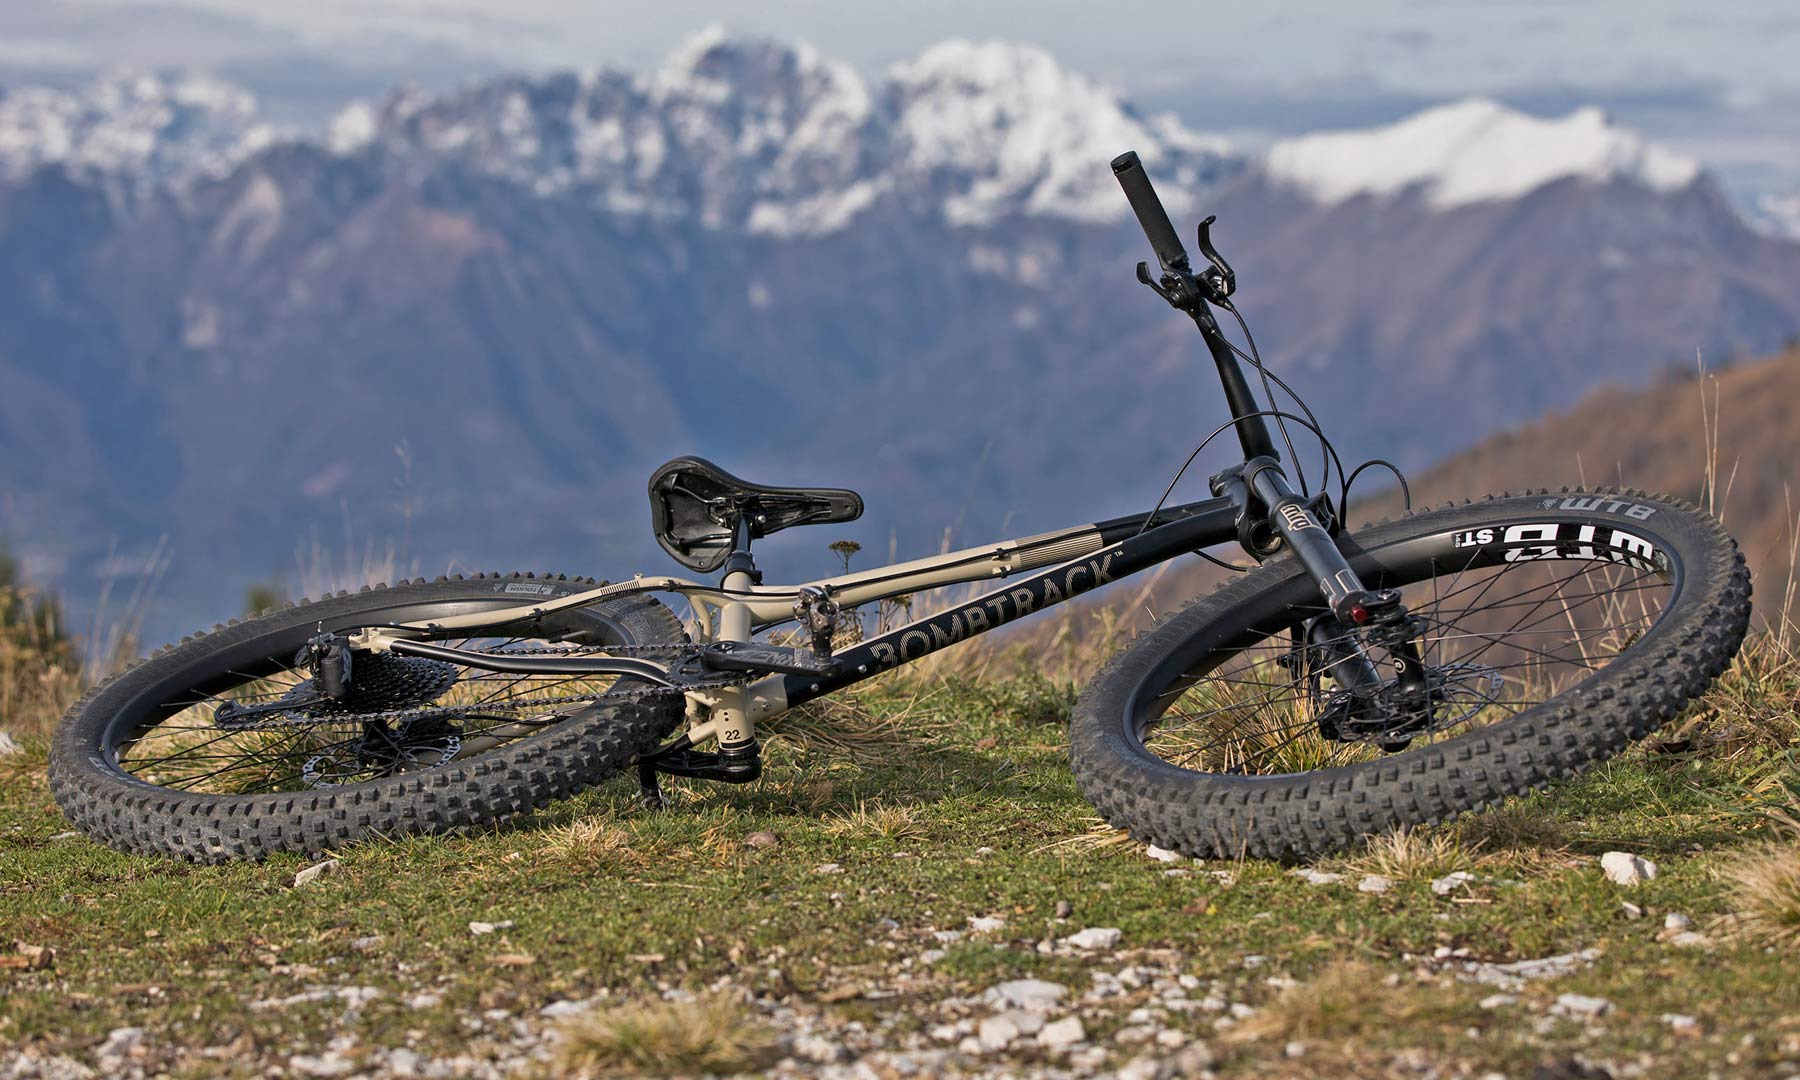 2020 Bombtrack Cale adventure bike, 120mm suspension corrected 4130 steel hardtail MTB adventure trail mountain bike, frame only